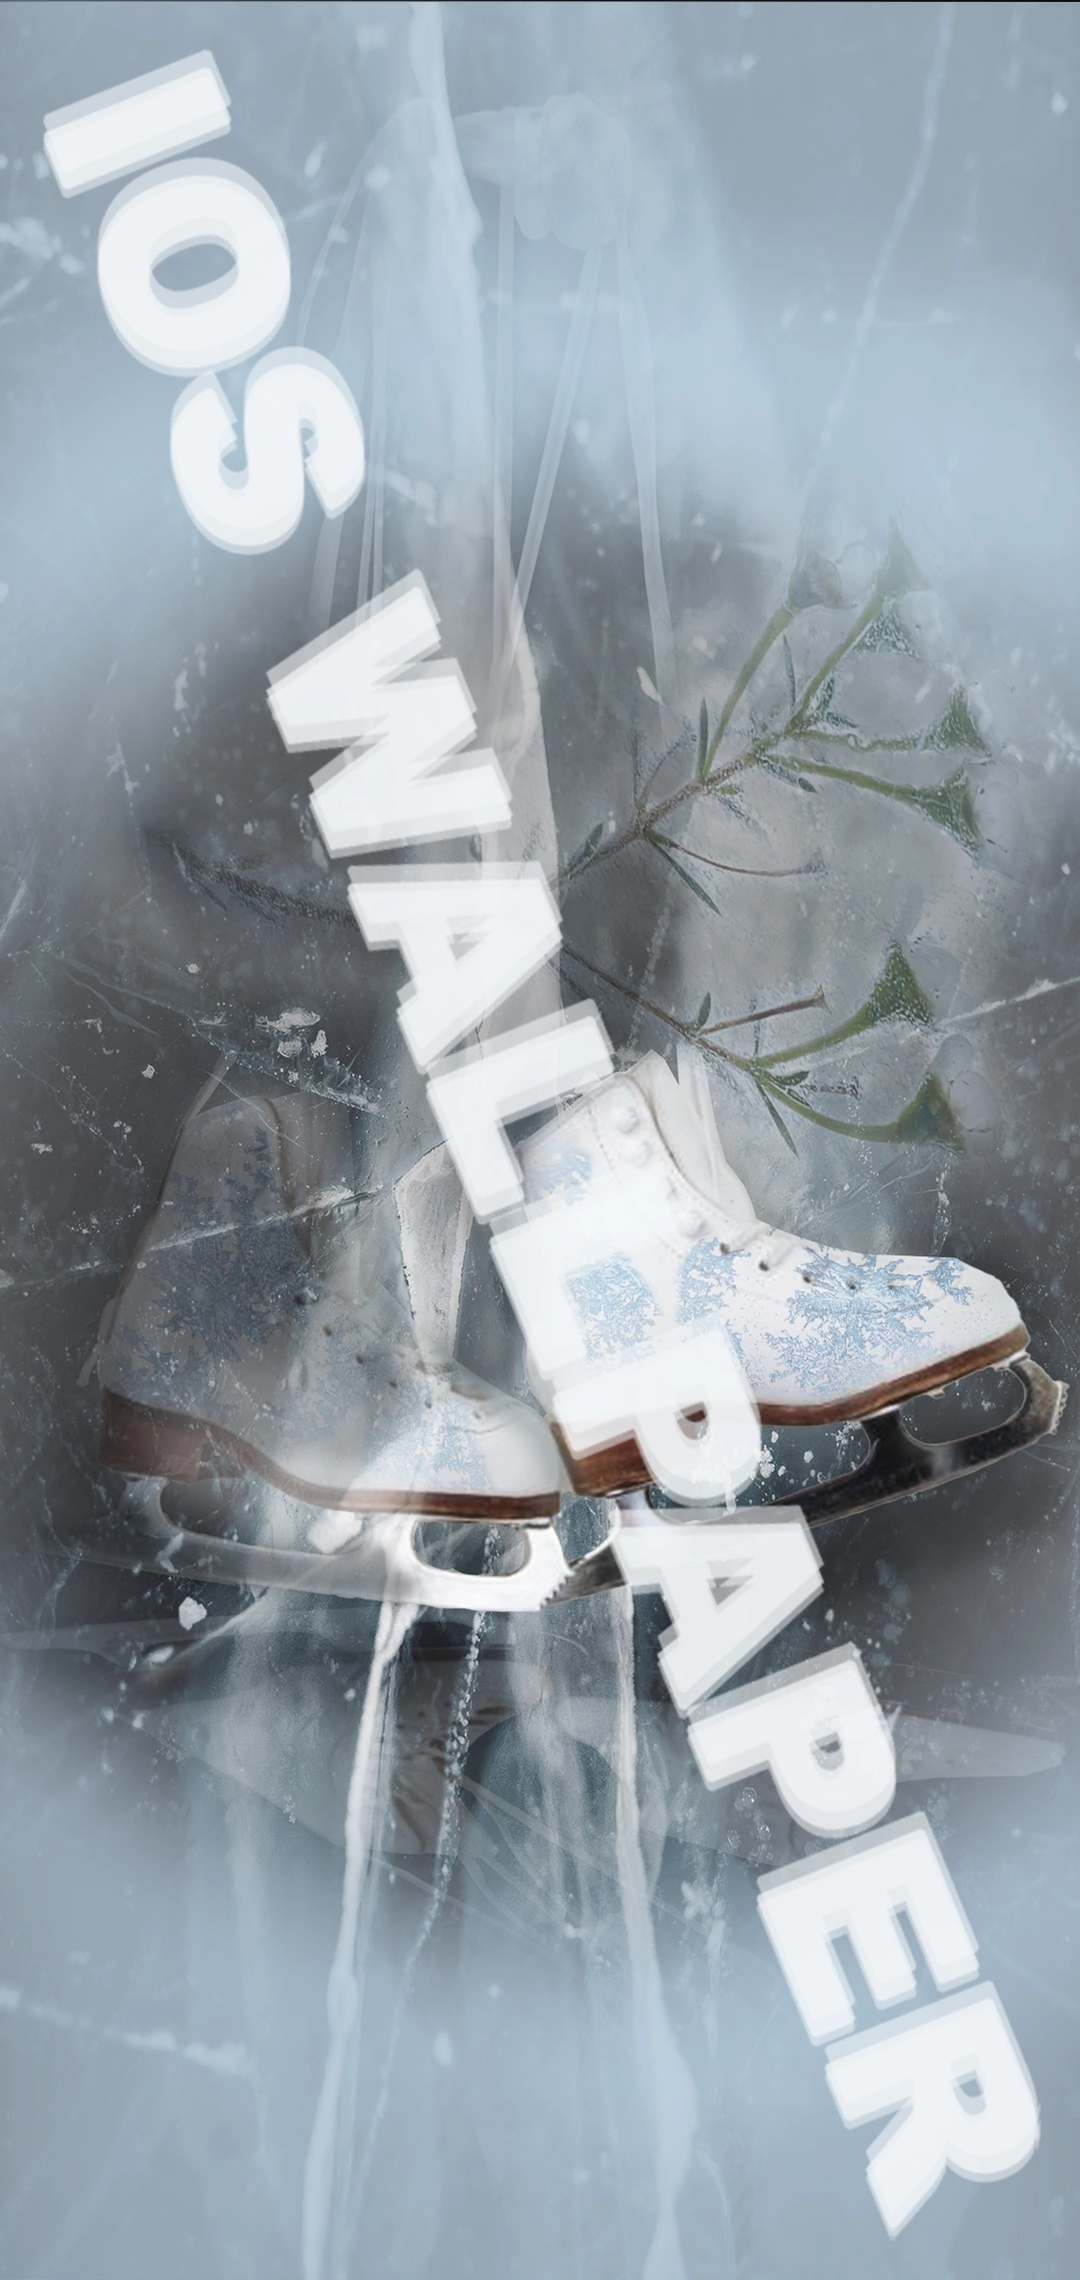 Skate in Ice - Plum's Digital Art